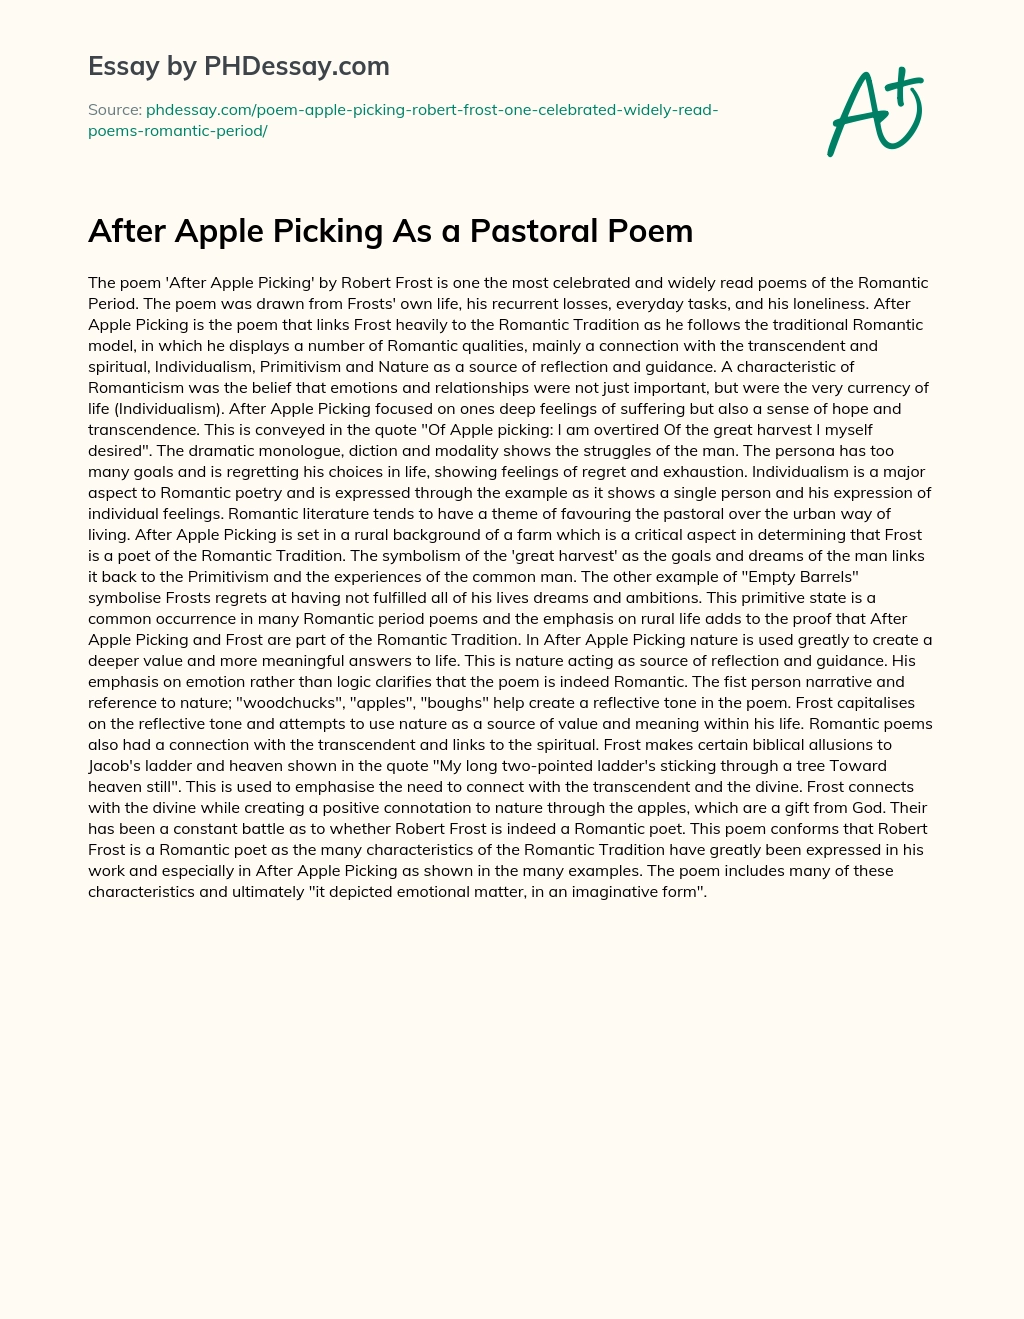 After Apple Picking As a Pastoral Poem essay